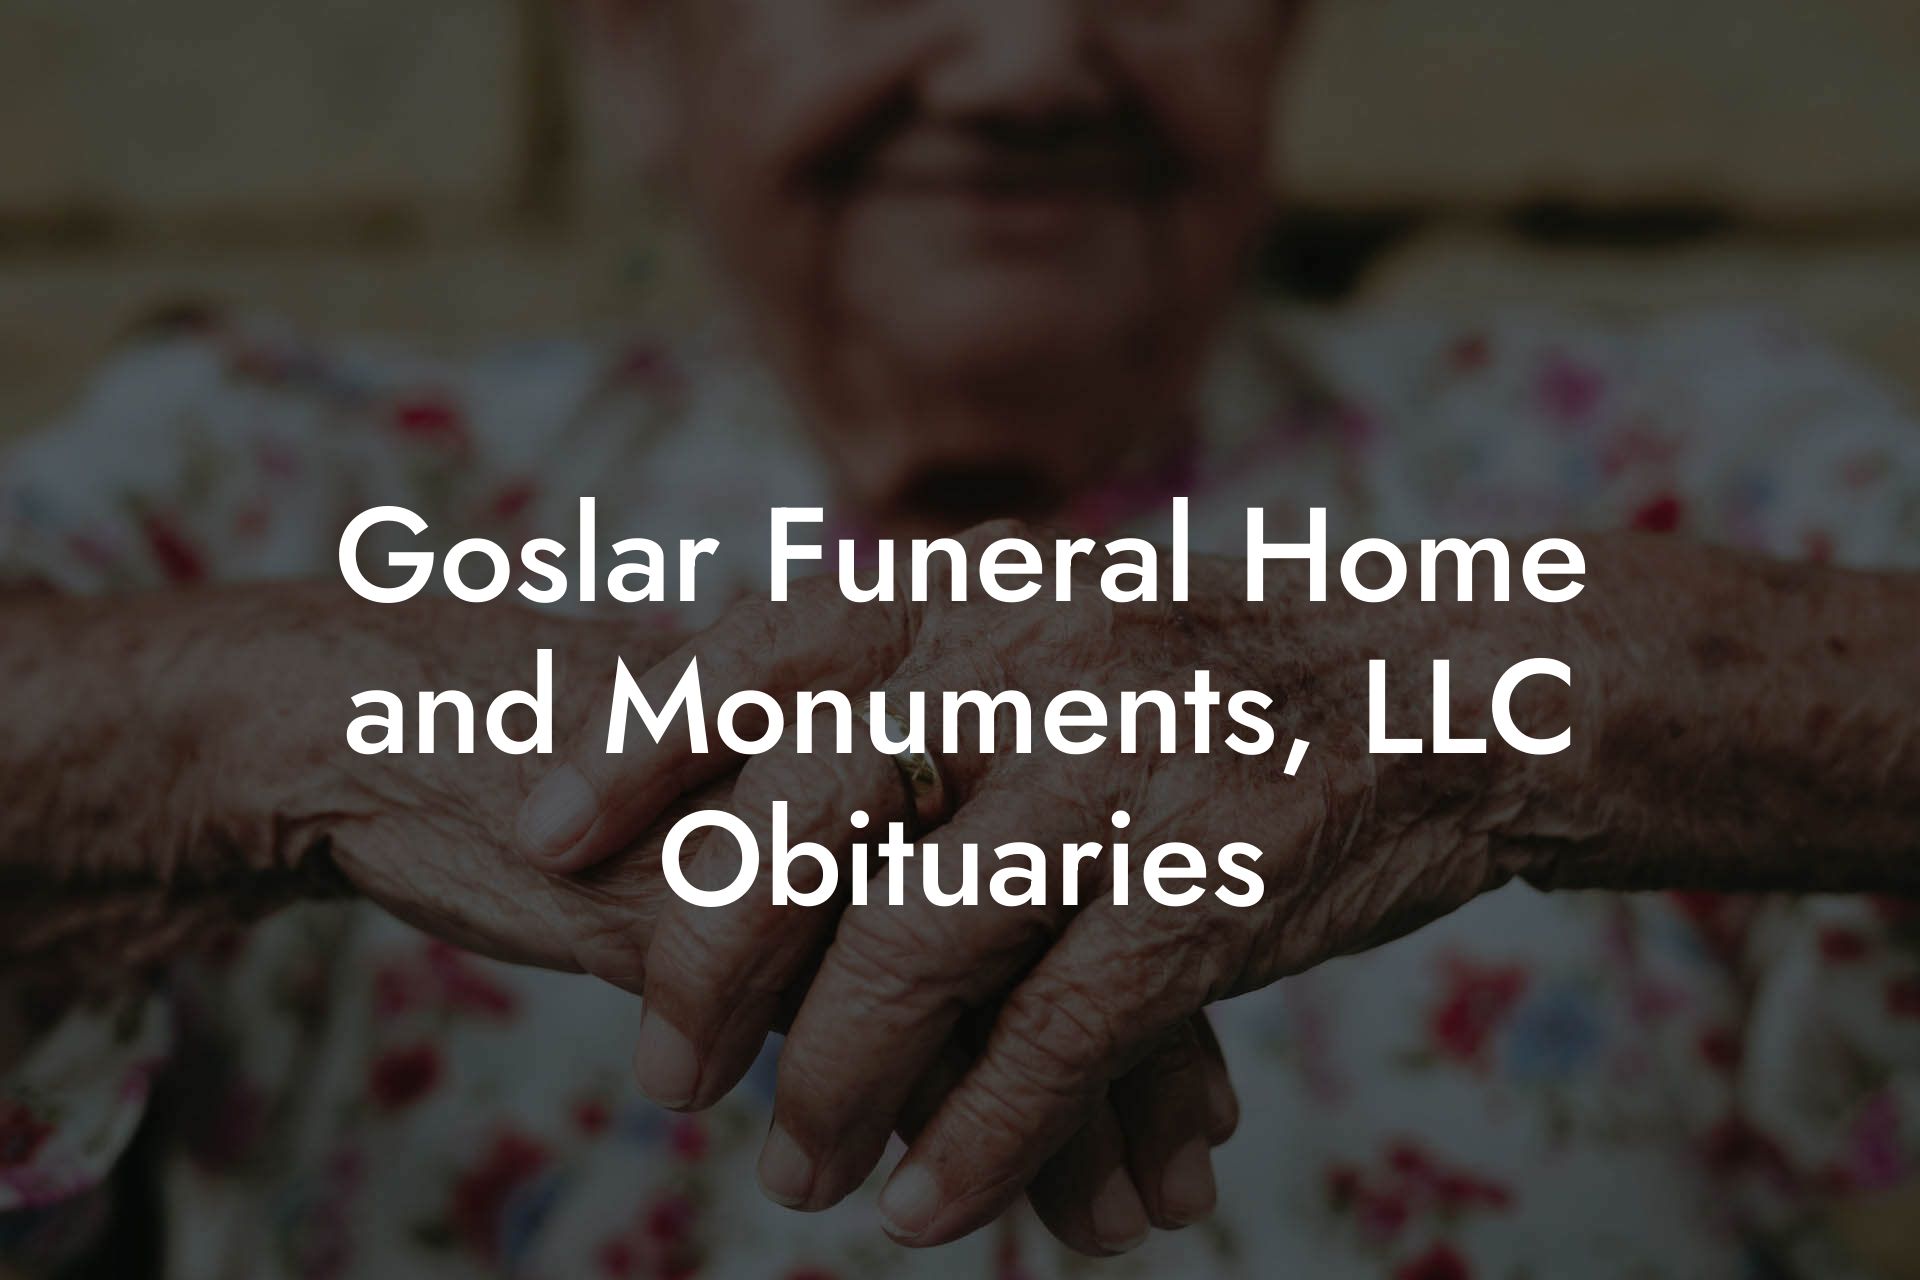 Goslar Funeral Home and Monuments, LLC Obituaries